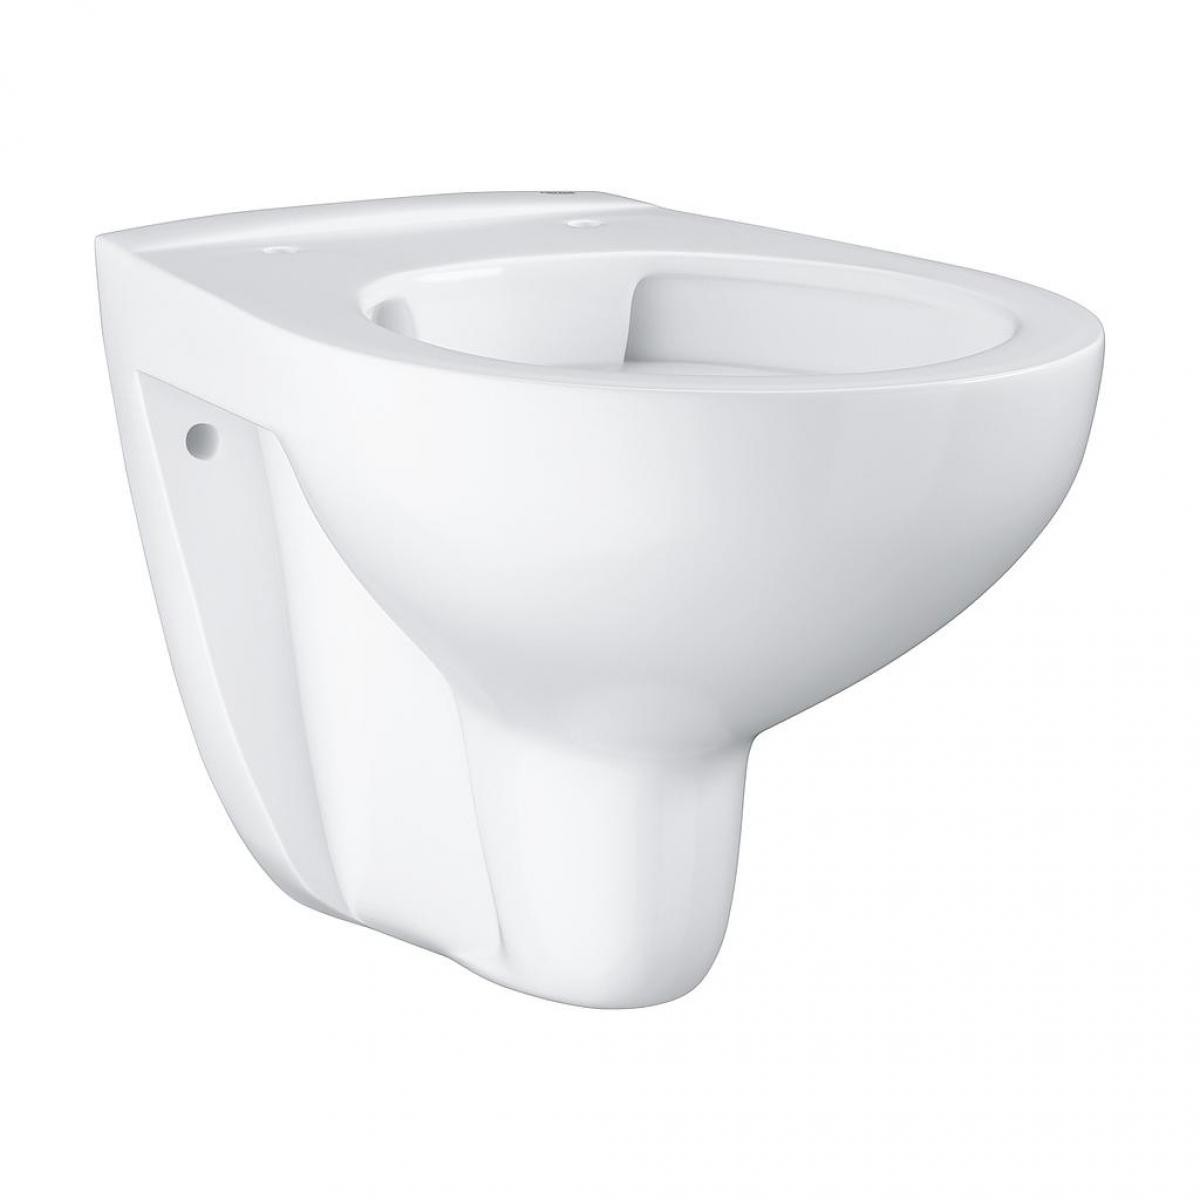 Grohe - Grohe - WC suspendu blanc sortie horizontale Bau Céramique - 39427000 - Broyeur WC